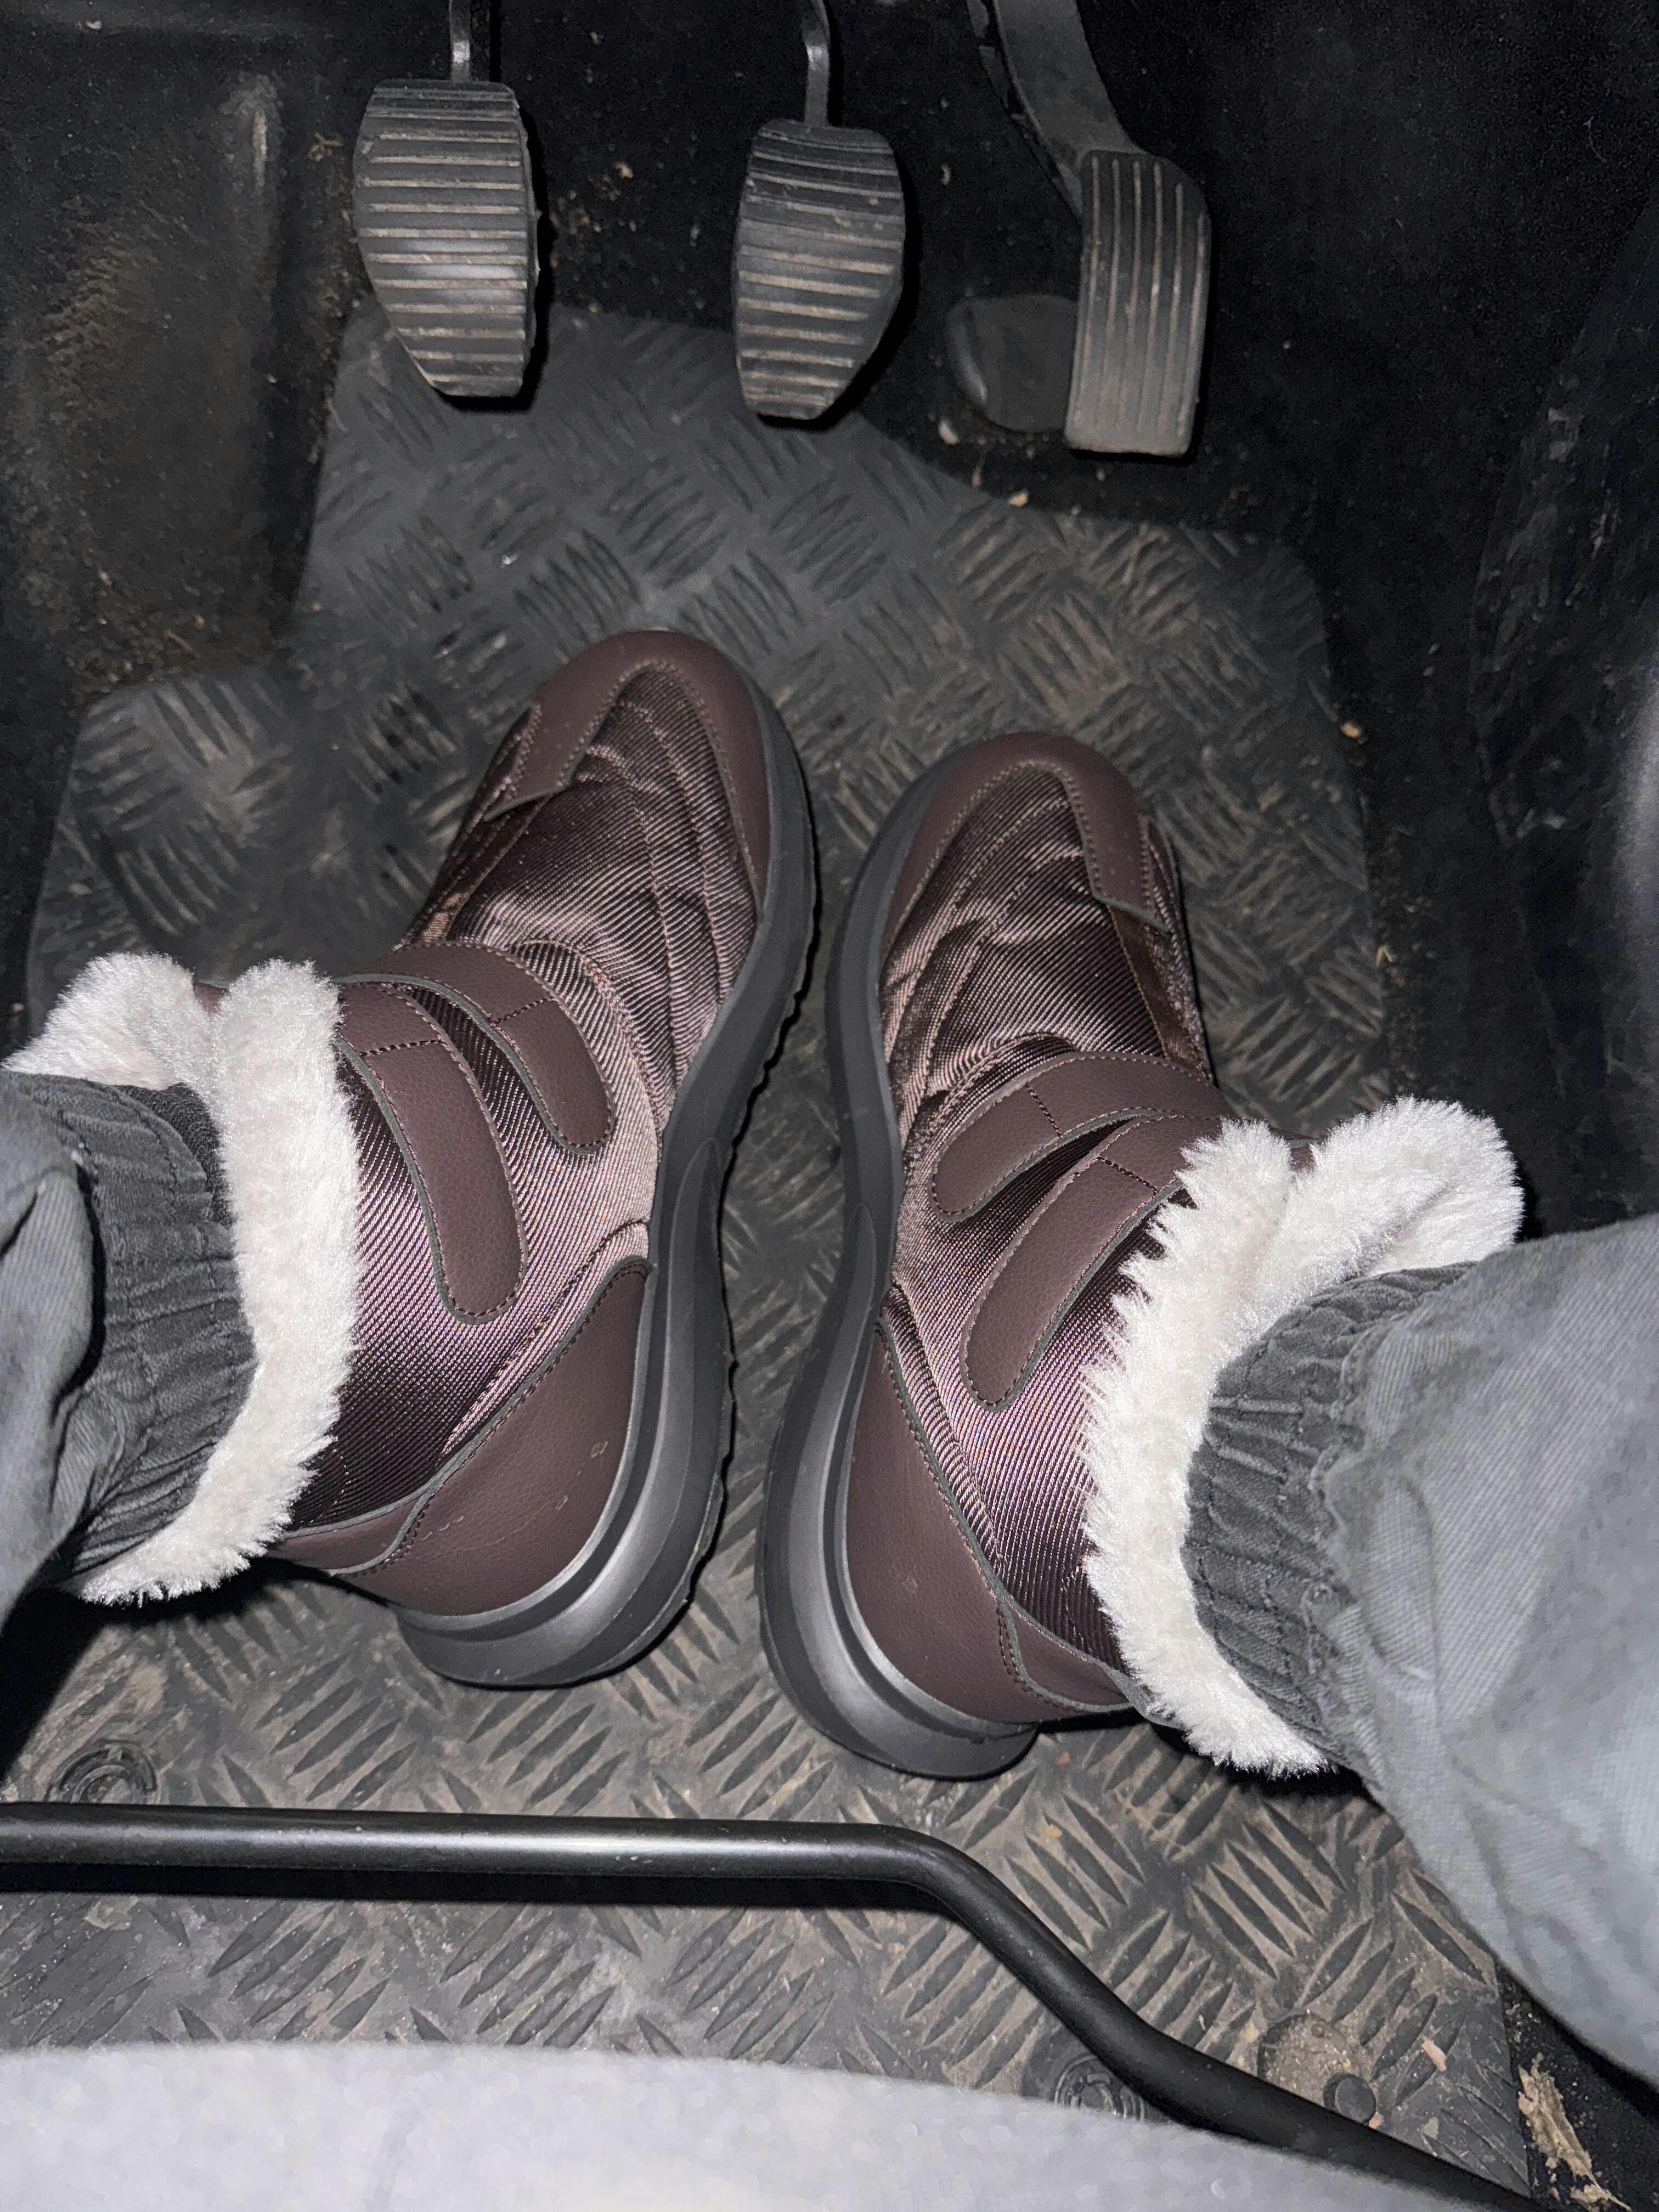 Adjustable Men’s wide winter boots CozyCore V3 | FitVille – FitVilleUK